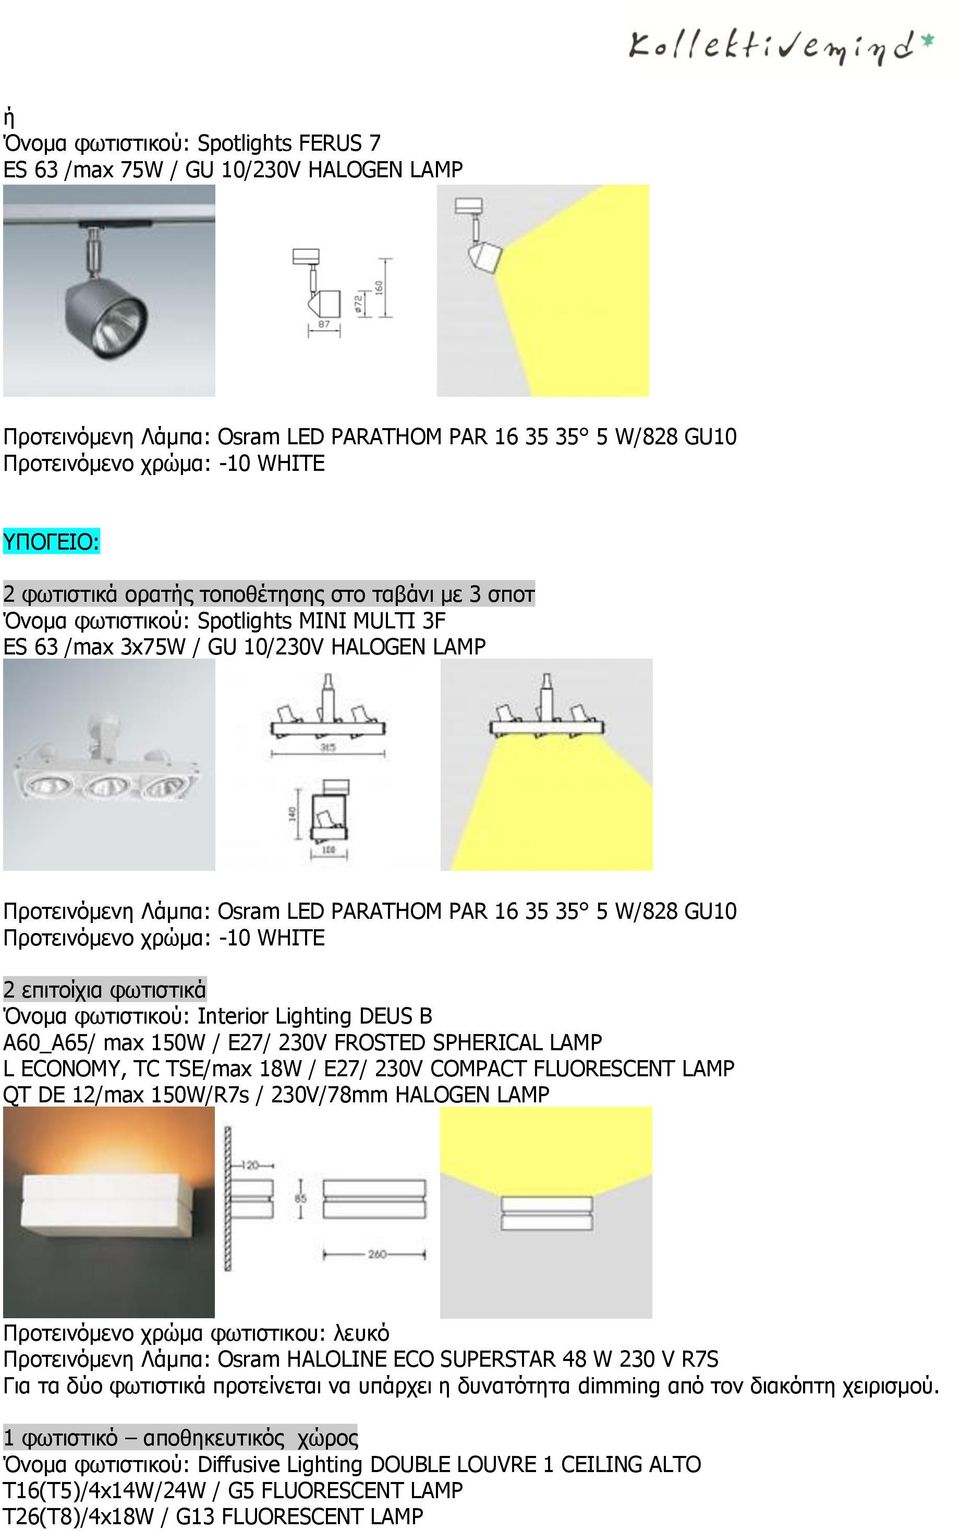 Interior Lighting DEUS B A60_A65/ max 150W / E27/ 230V FROSTED SPHERICAL LAMP L ECONOMY, TC TSE/max 18W / E27/ 230V COMPACT FLUORESCENT LAMP QT DE 12/max 150W/R7s / 230V/78mm HALOGEN LAMP